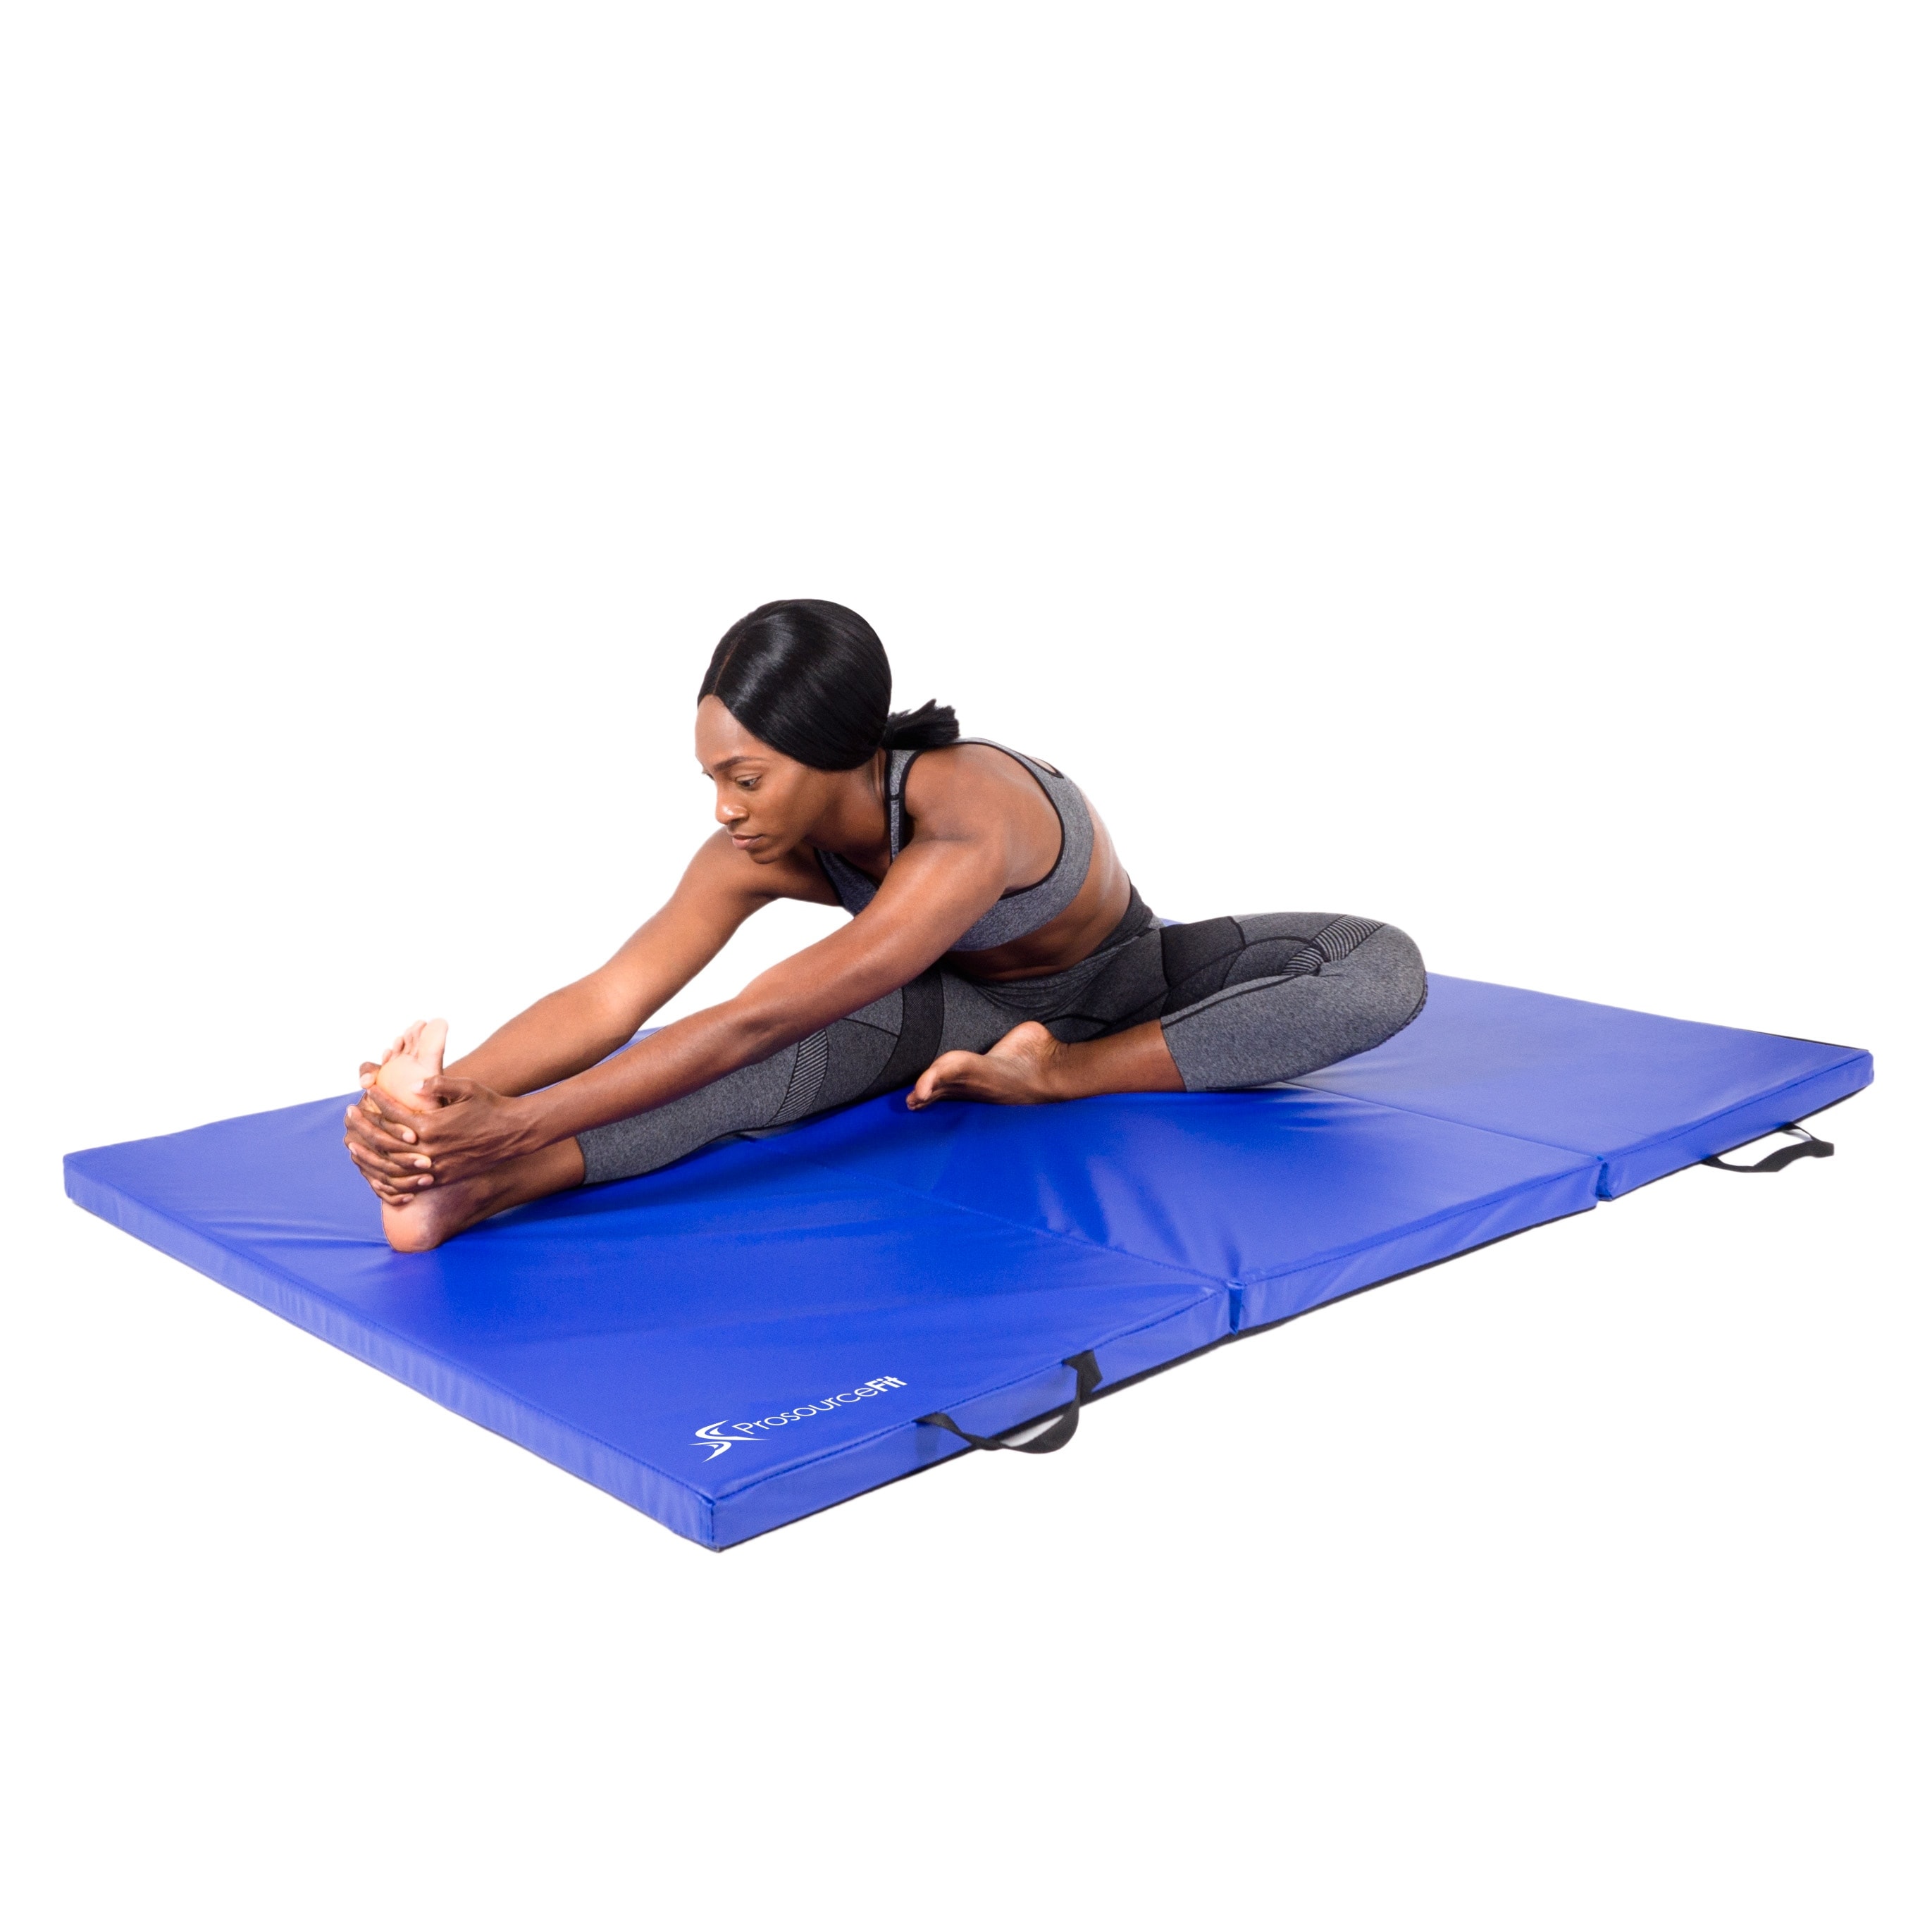 PVC mat for home gym mats aerobics use Urban Fitness Yoga Exercise Pilates Mat 